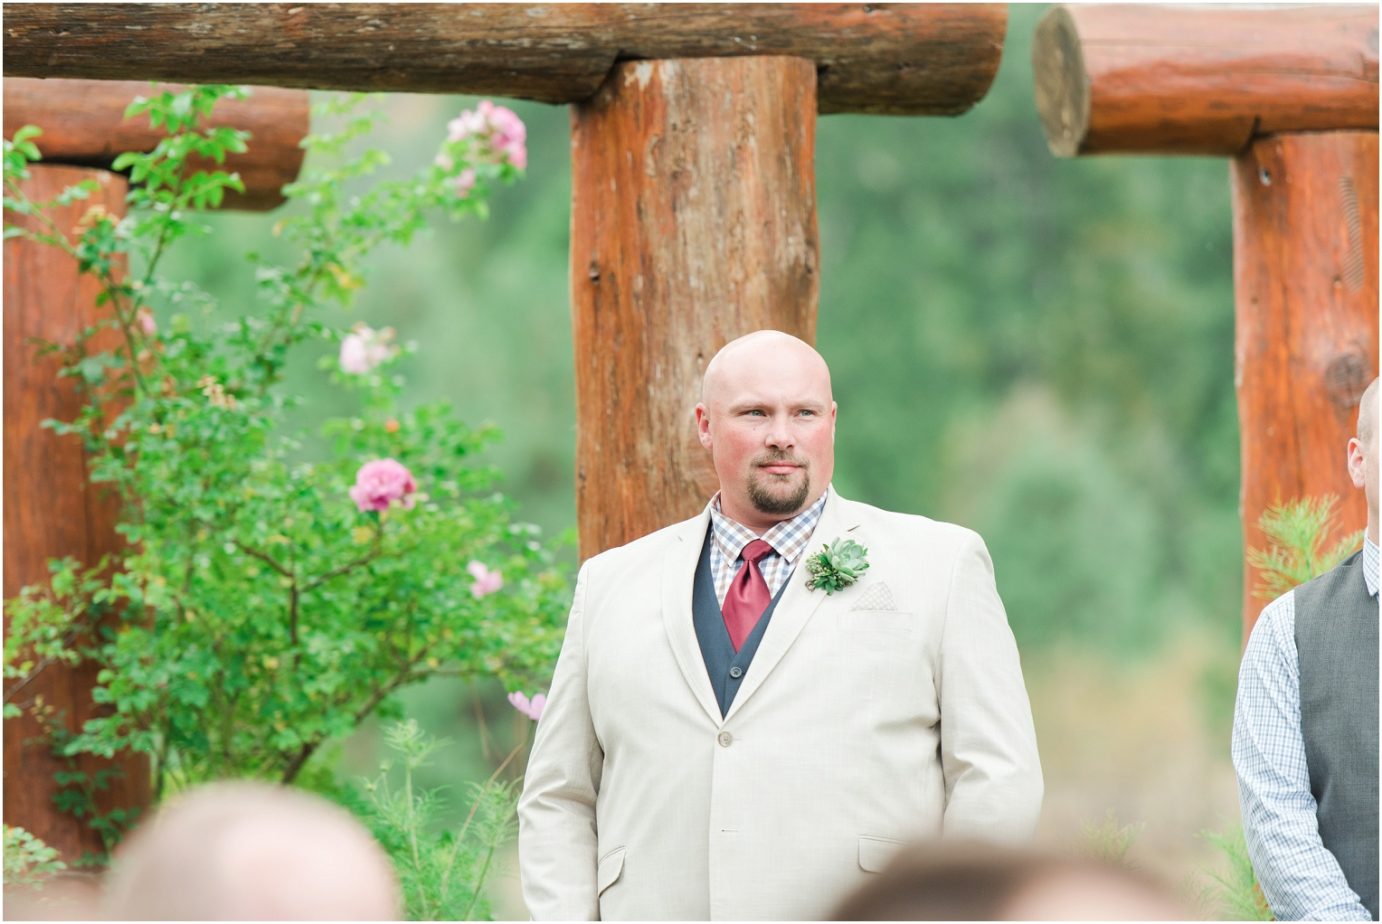 Pine River Ranch Wedding Ceremony Photo